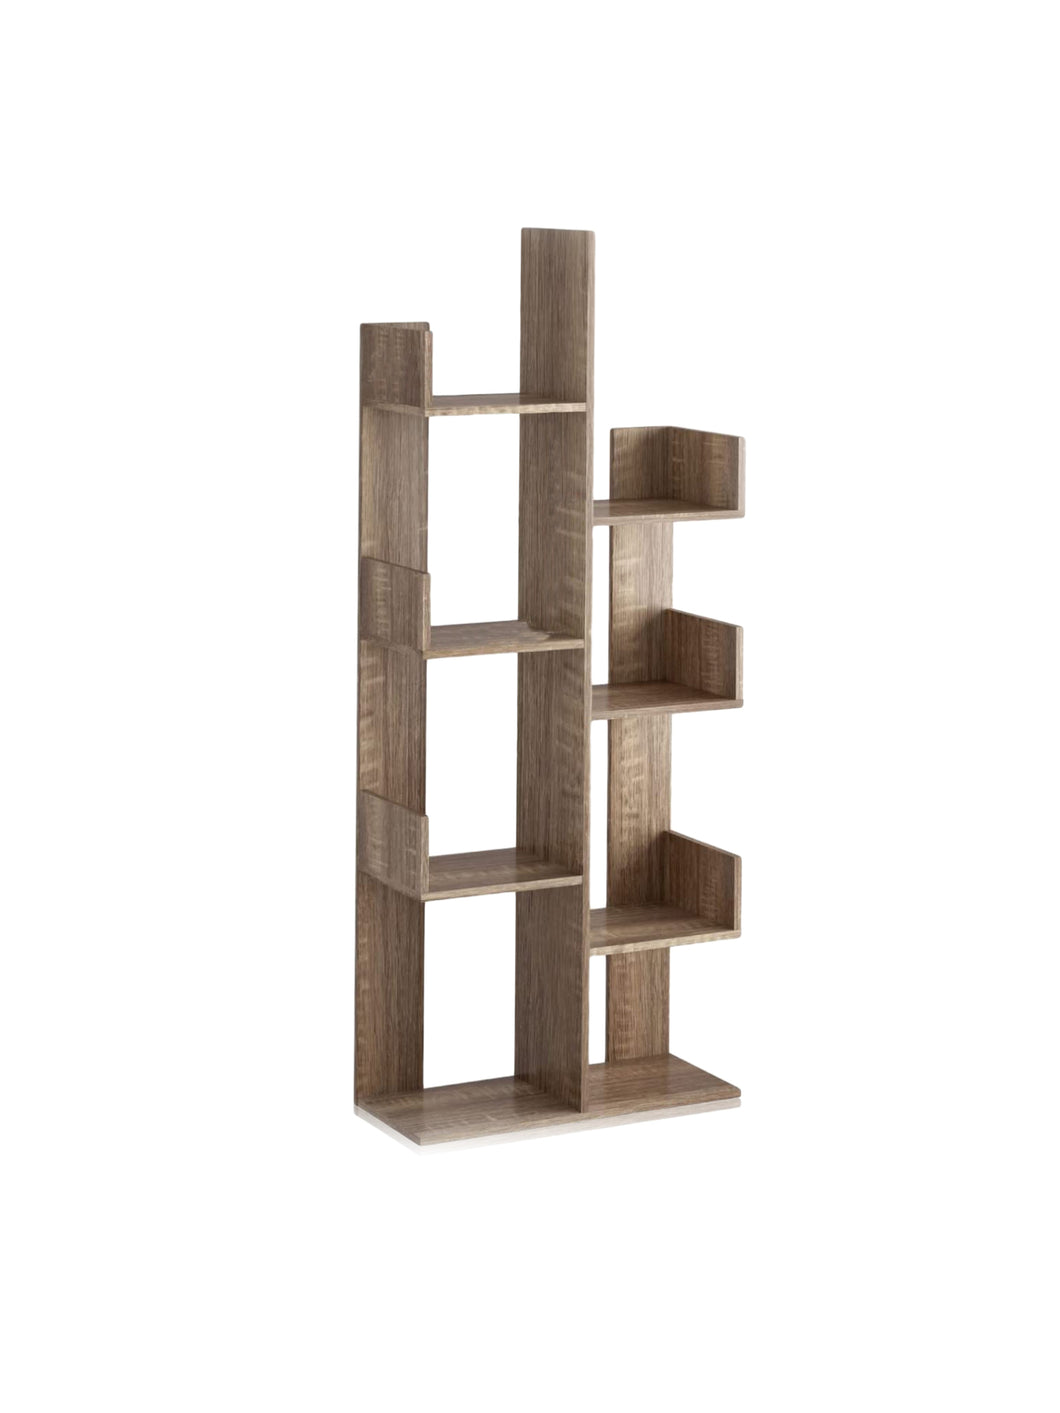 Rustic Wood Freestanding Industrial Bookshelf For Storage In Bedroom, Living Room, And Office